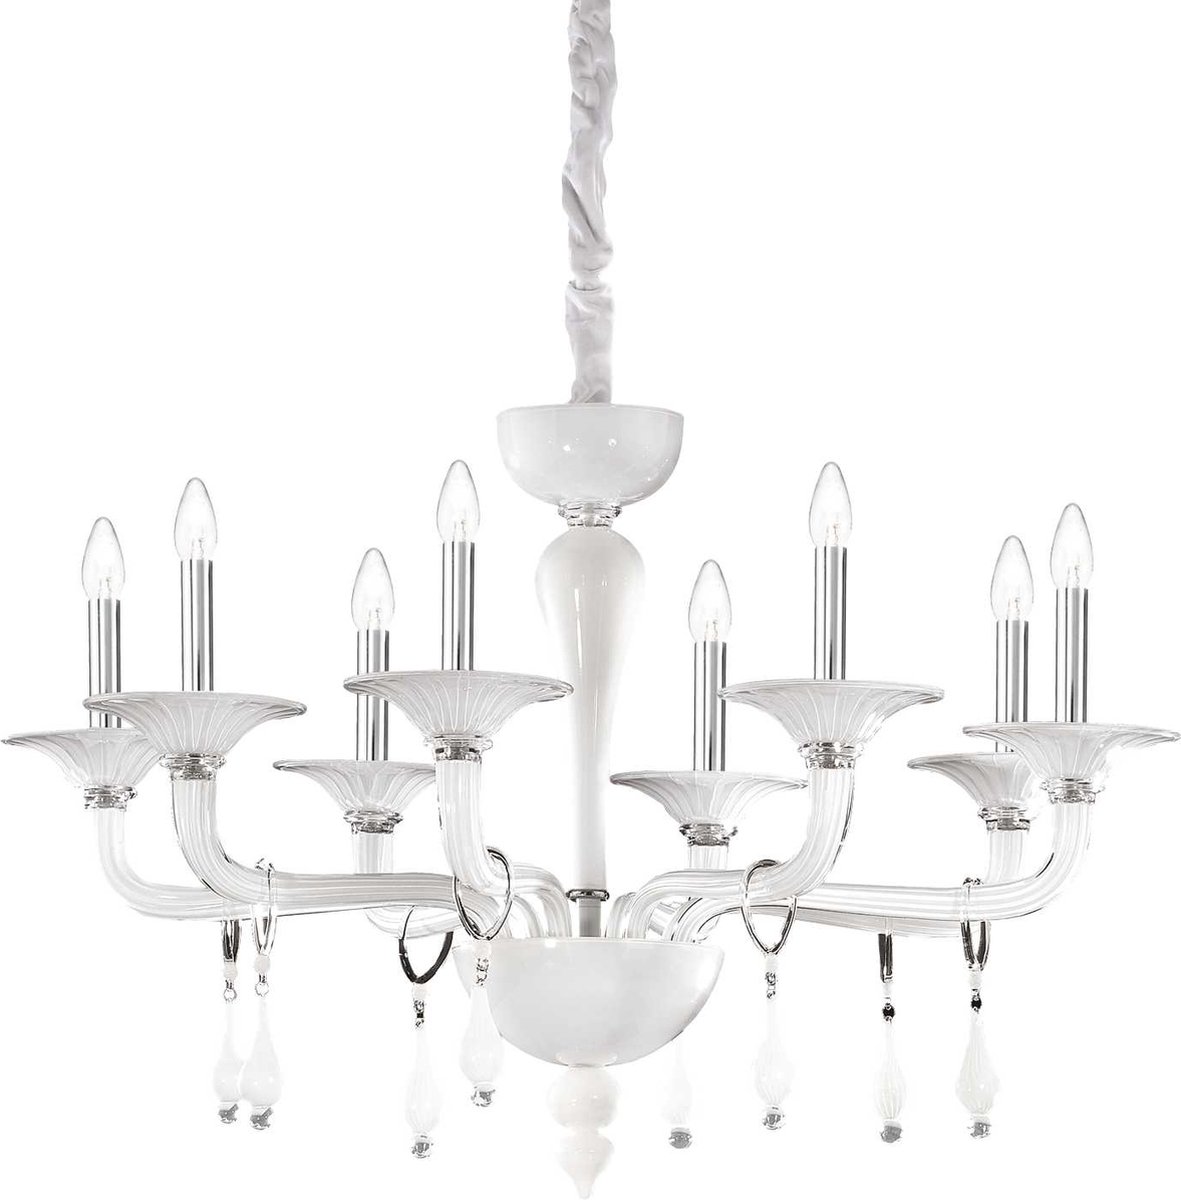 Ideal Your Lux - Hanglamp Modern - Glas - E14 - Voor Binnen - Lamp - Lampen - Woonkamer - Eetkamer - Slaapkamer - Wit